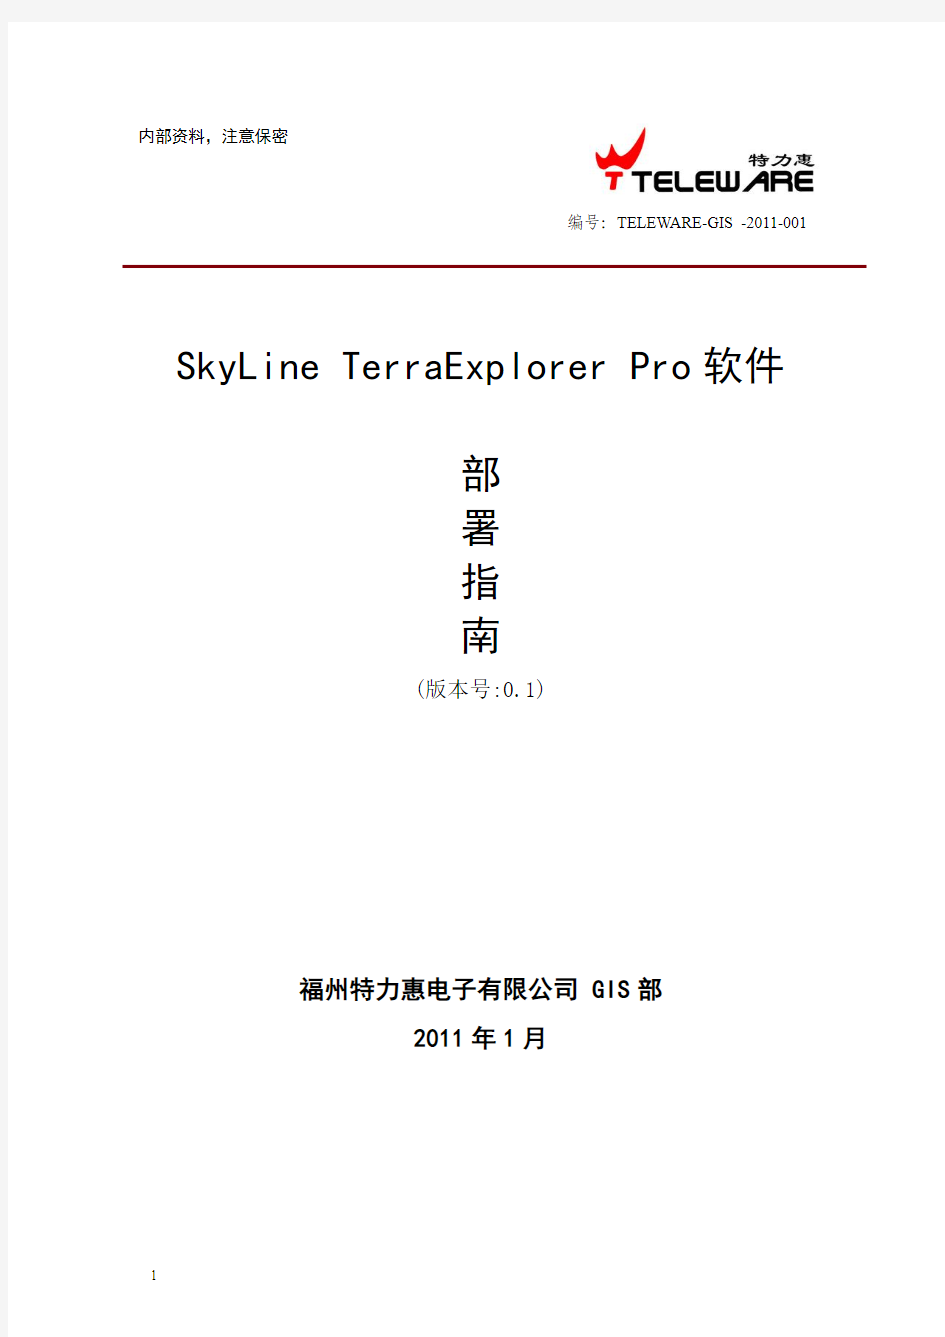 skyline TerraExplorer Pro安装文档